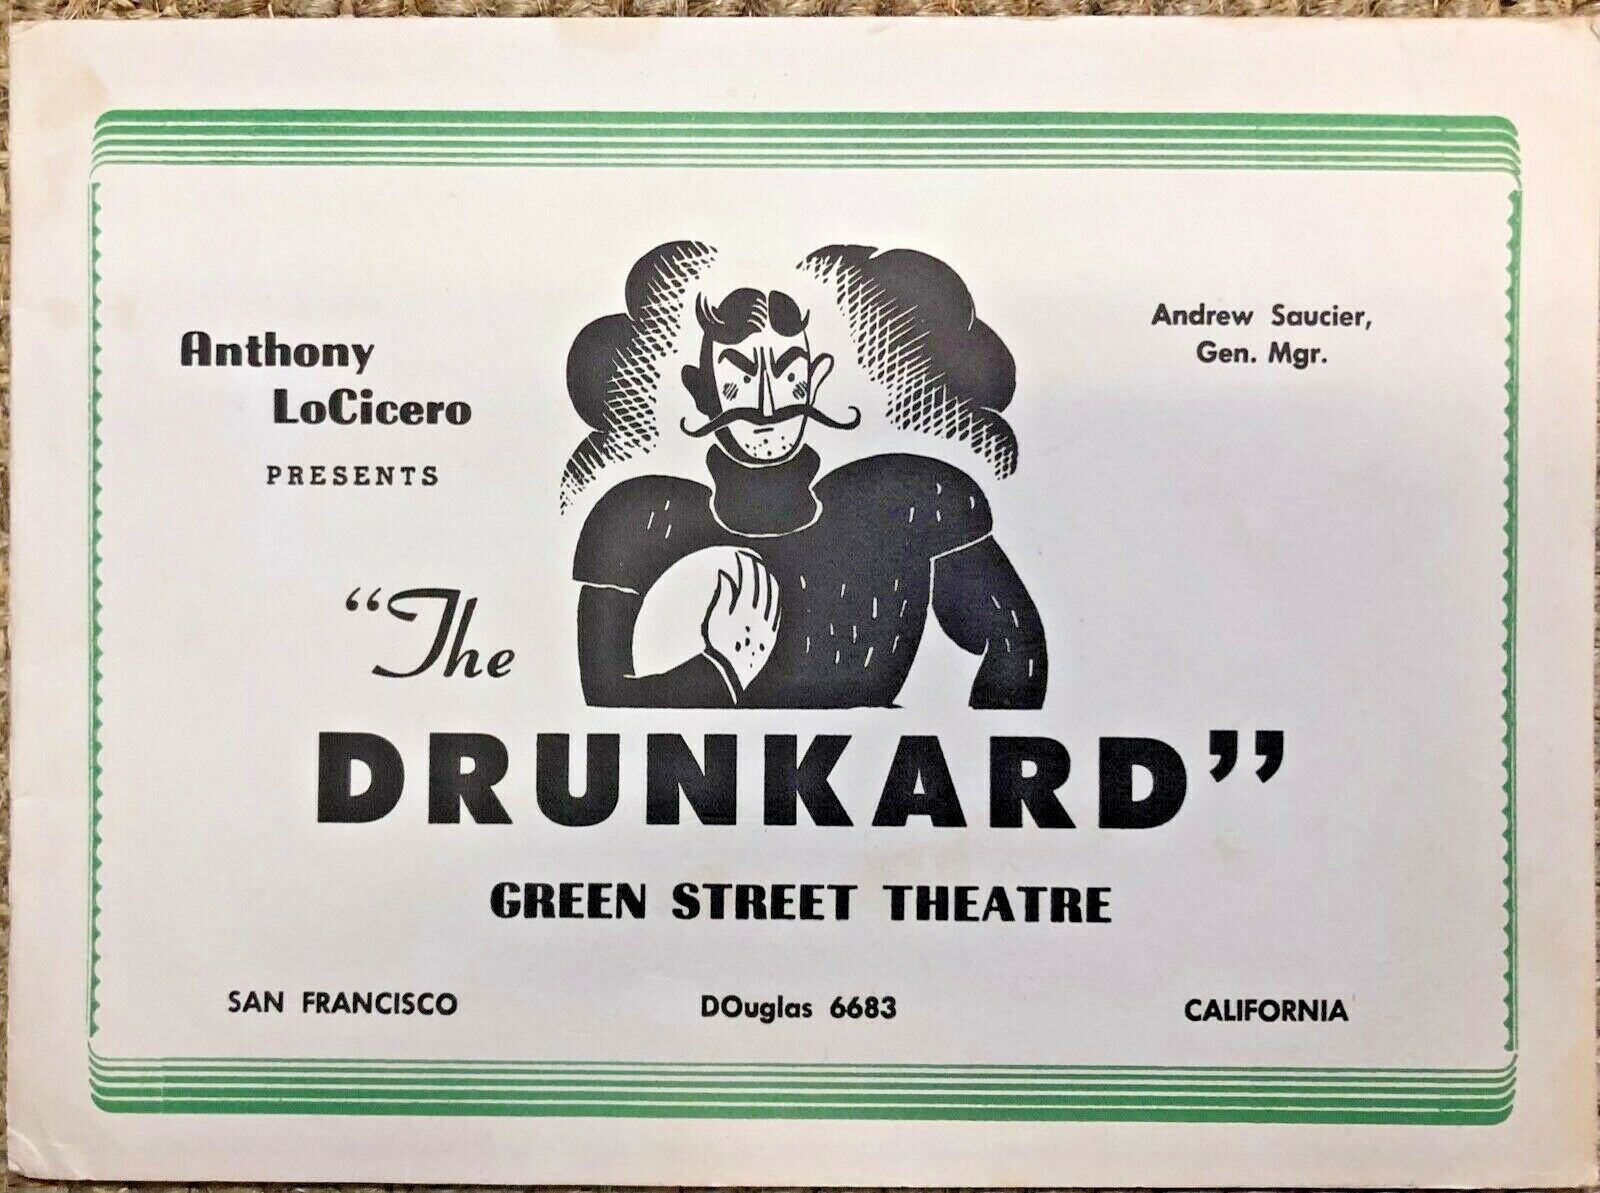 Vtg. 1945 The Drunkard Green Street Theatre, San Francisco Souvenir Photo Folder